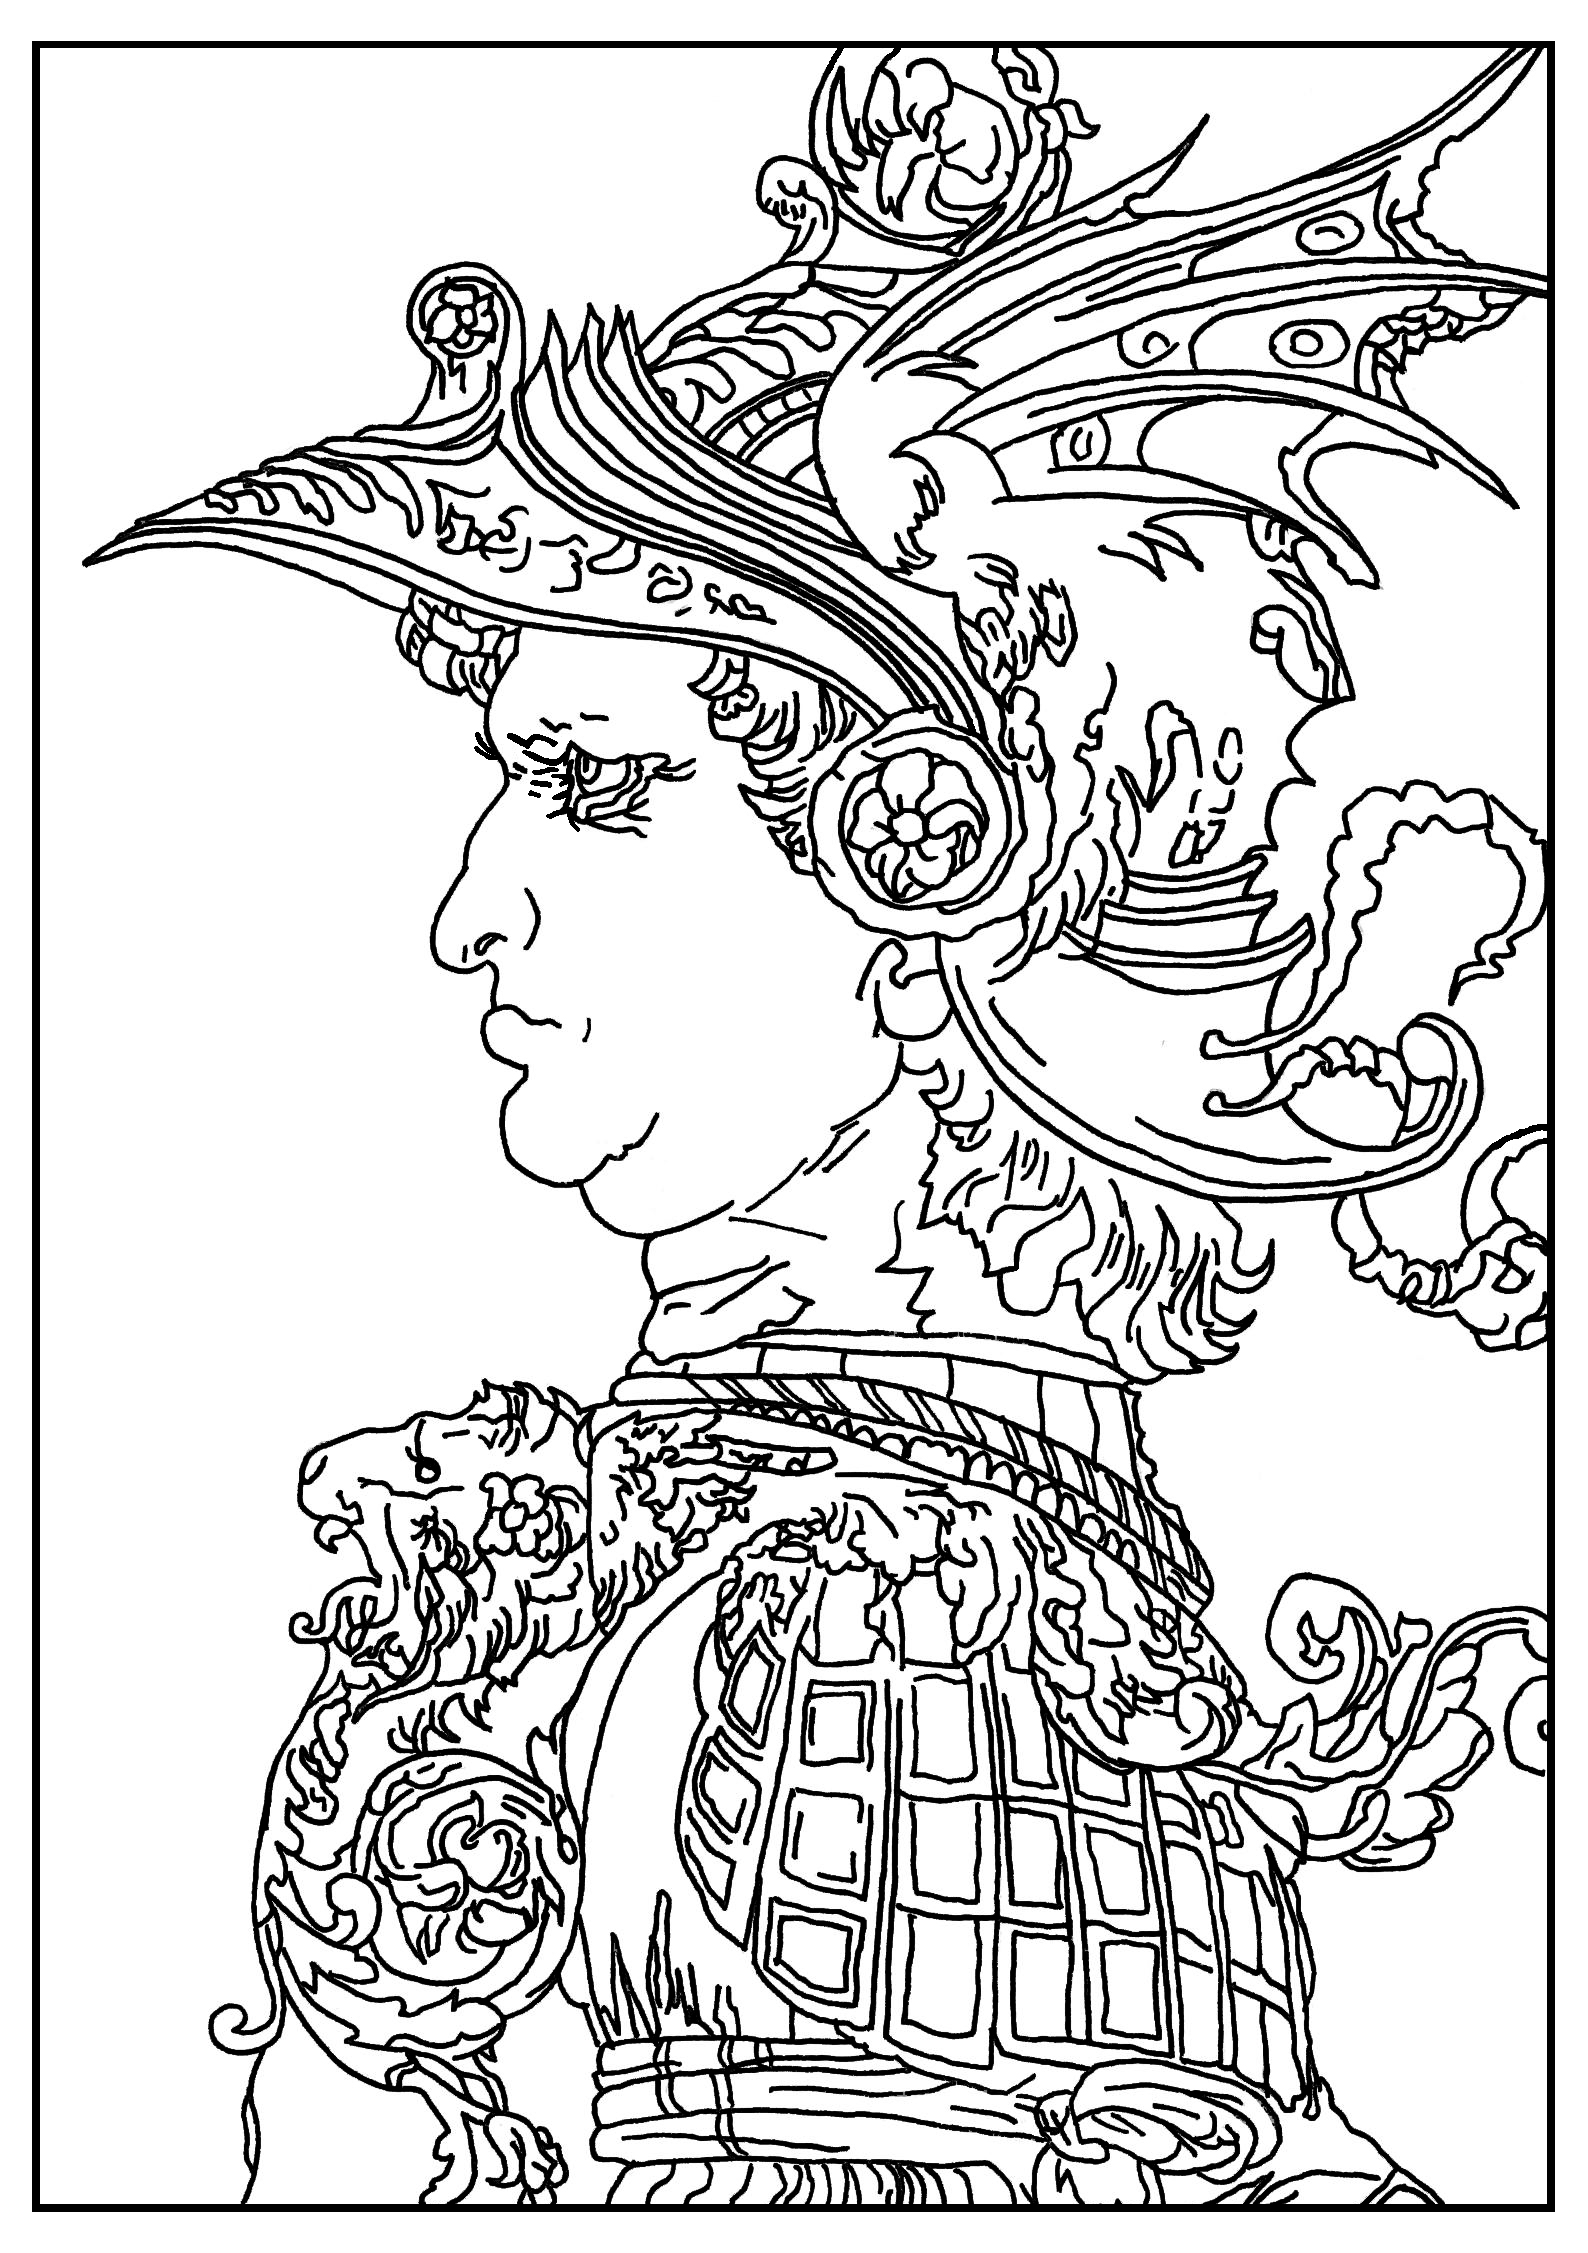 Profile of a warrior in helmet